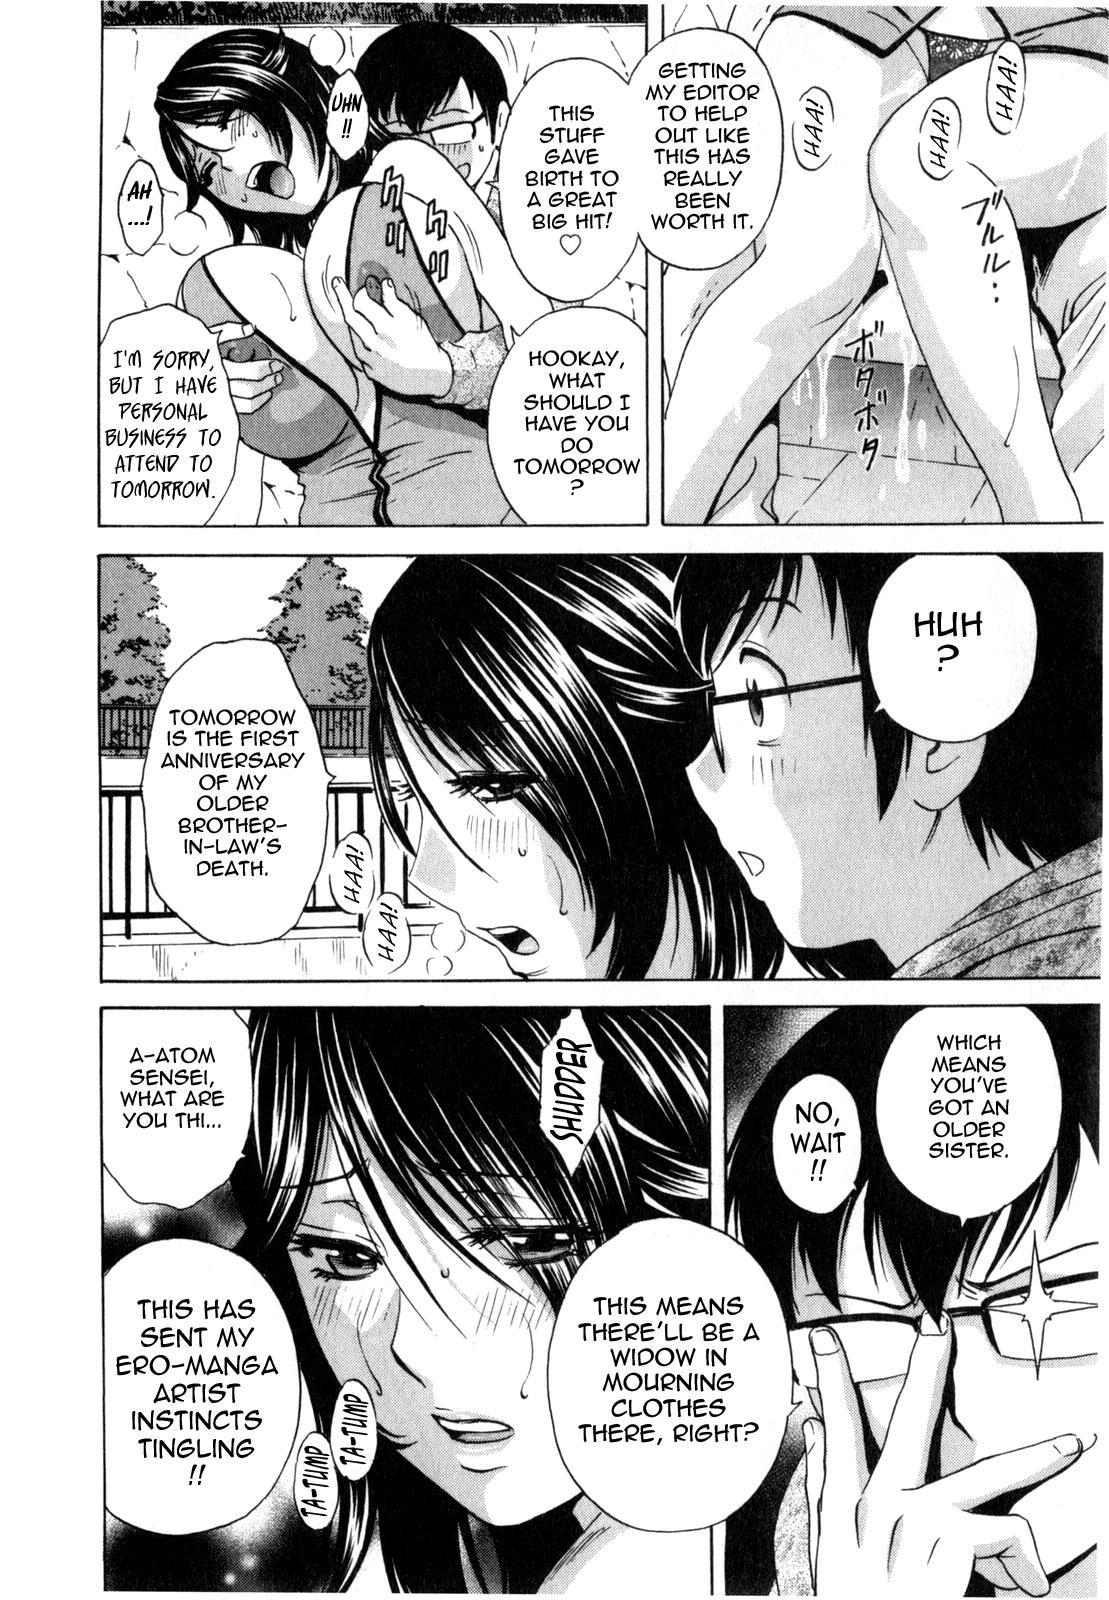 [Hidemaru] Life with Married Women Just Like a Manga 3 - Ch. 1-6 [English] {Tadanohito} 91